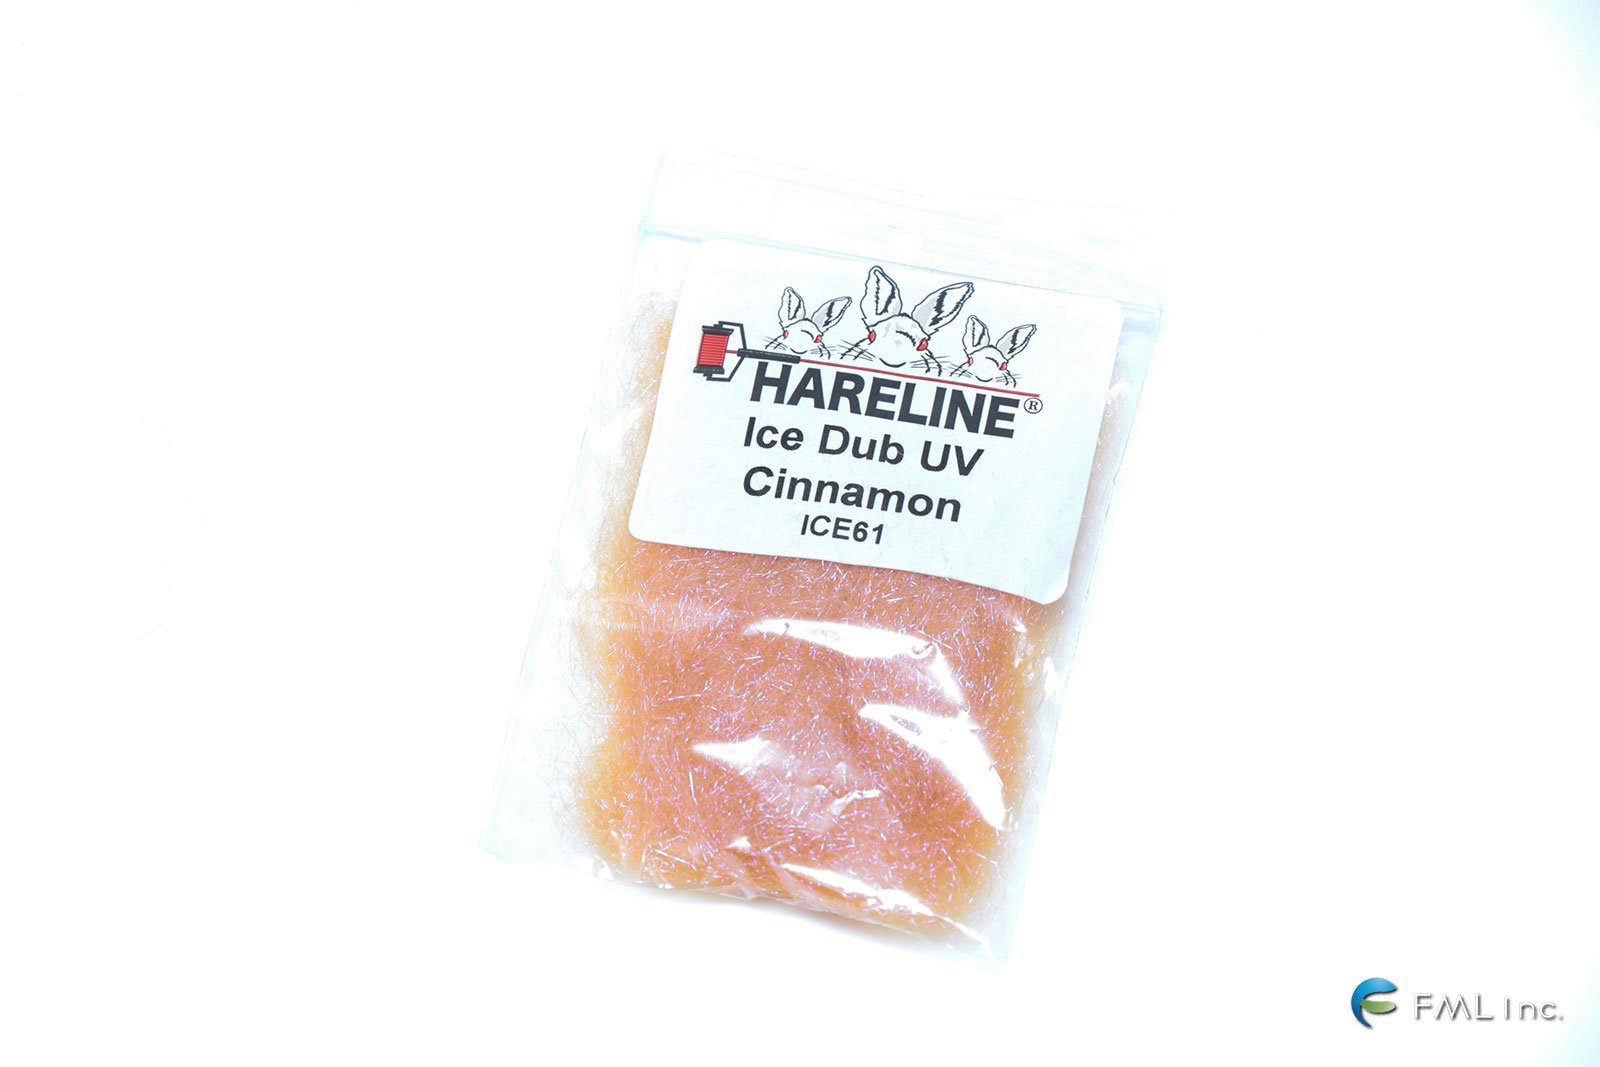 HARELINE DUBBIN Ice Dub UV Cinnamon (ICE61) FML FISHING ONLINE SHOP